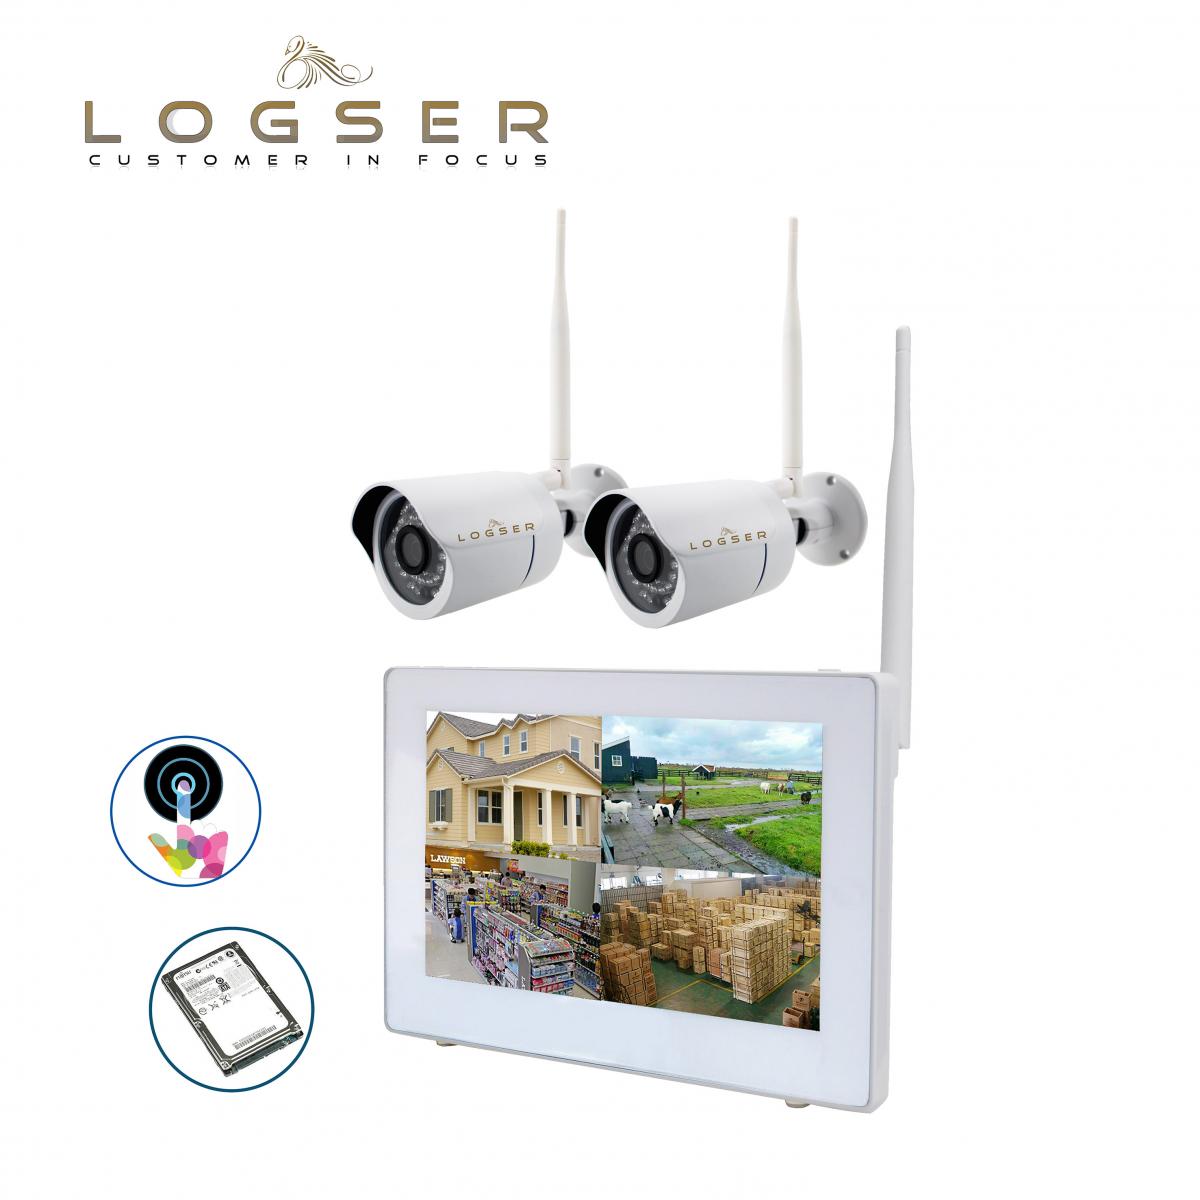 LOGSER AG - 9 Zoll Full-Touch Funk Videoüberwachung HD 720p Echtzeit, 500GB  SATA Festplatte, 2x Nachtsicht Kameras